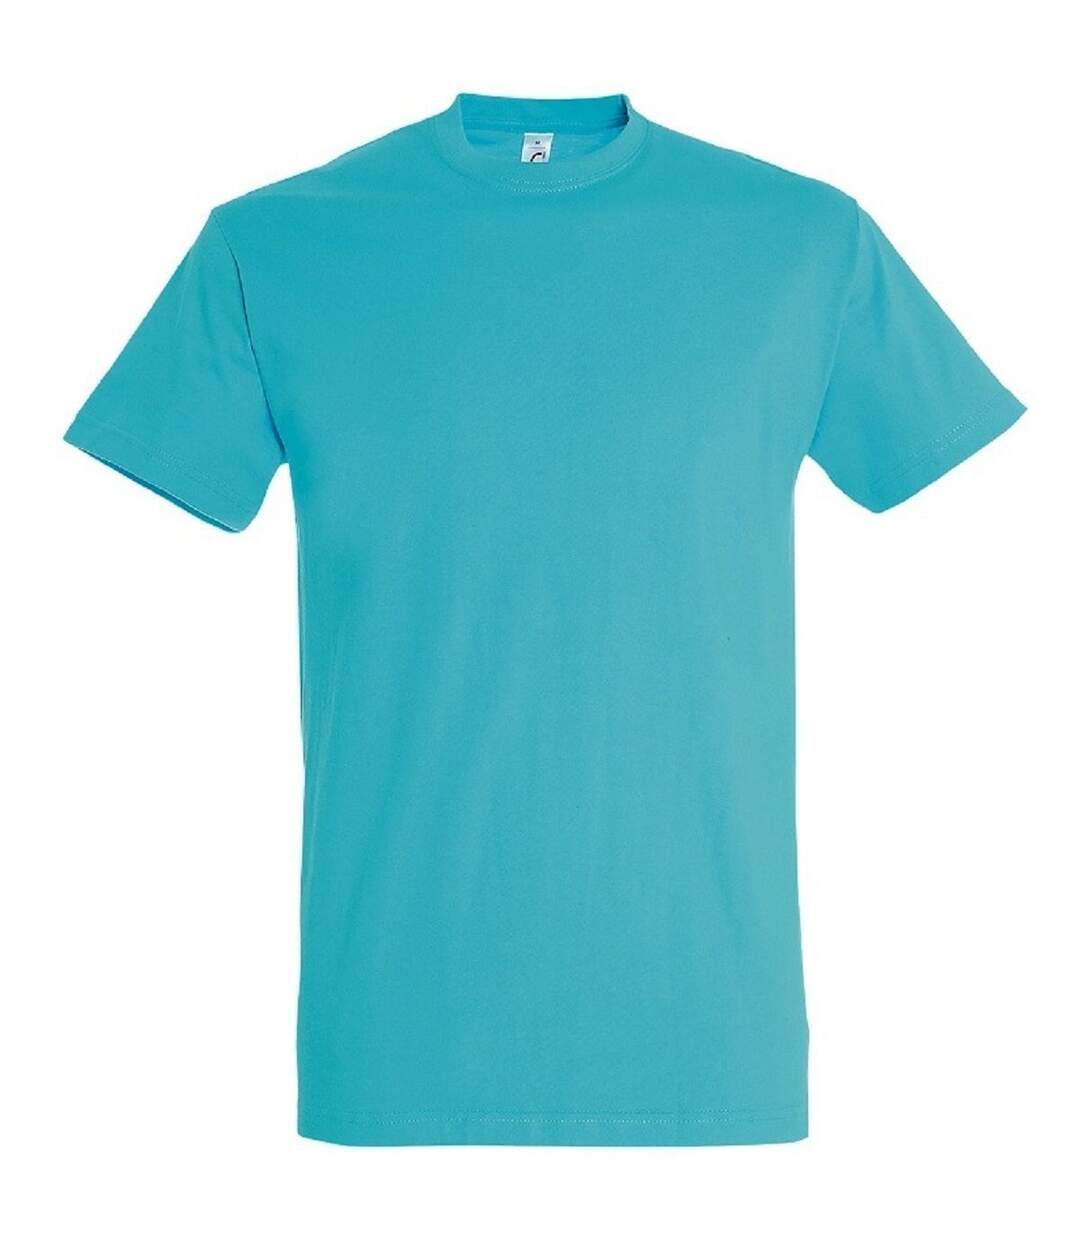 T-shirt manches courtes - Mixte - 11500 - bleu atoll